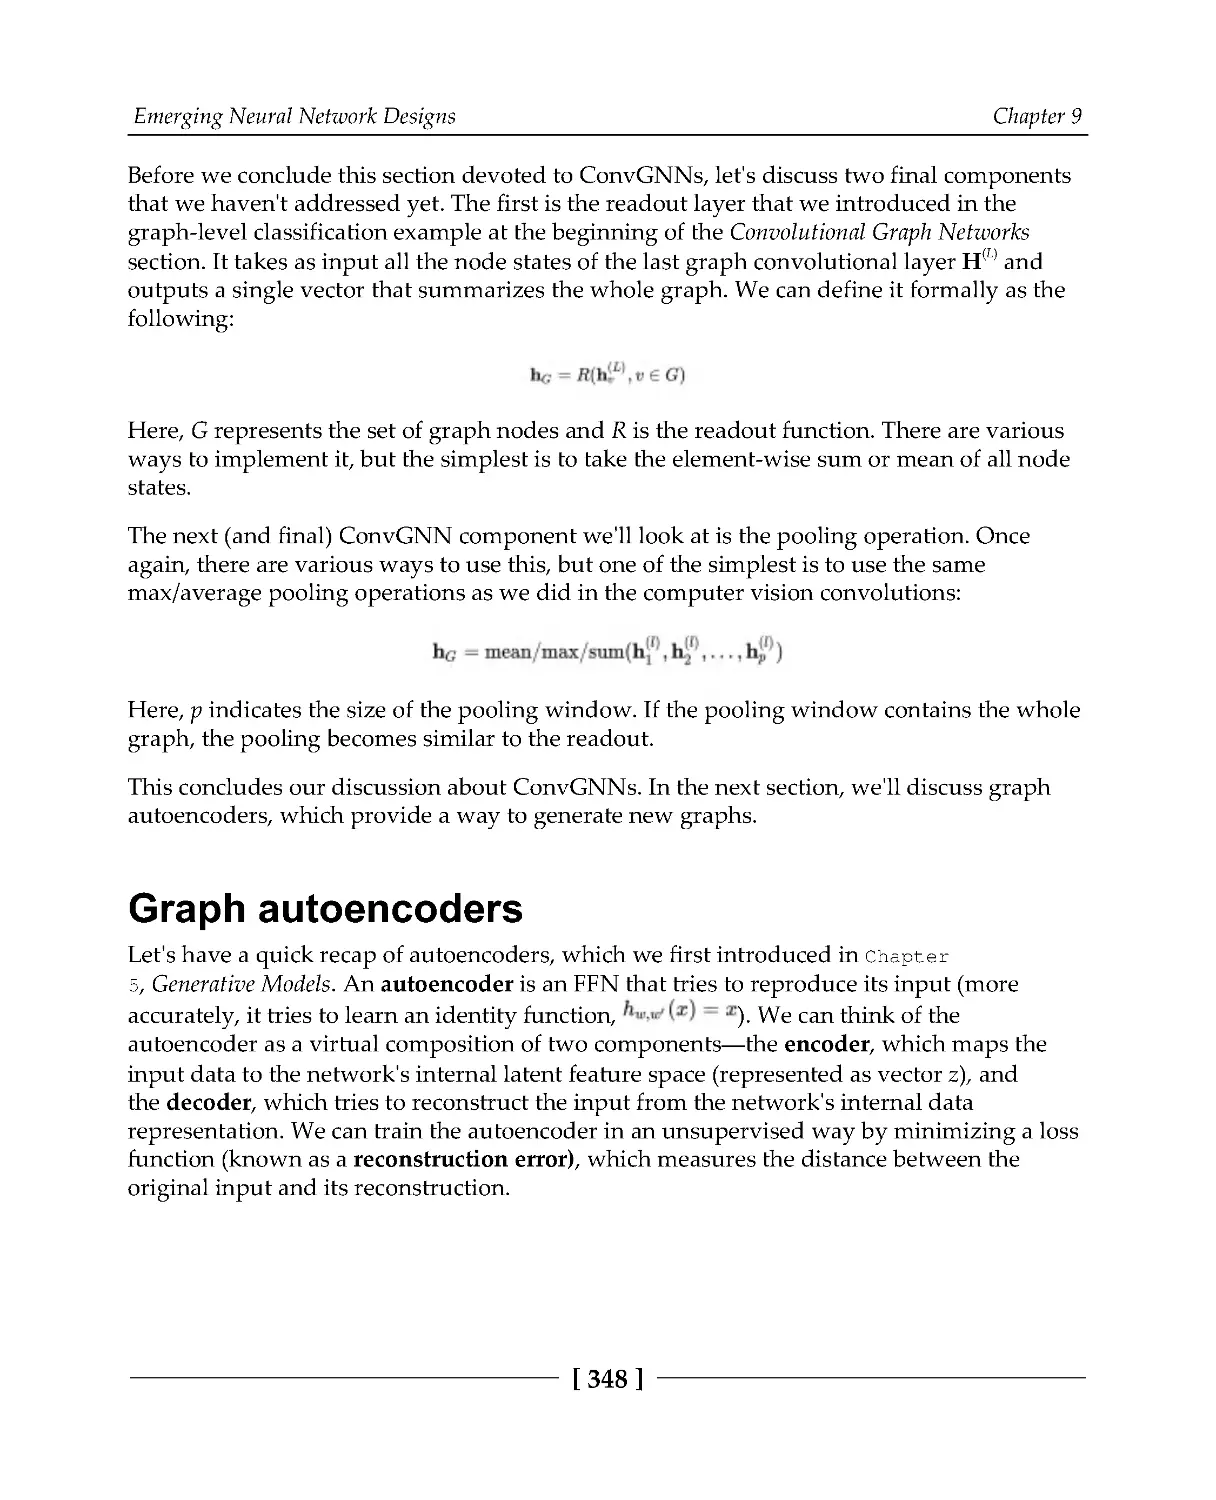 Graph autoencoders